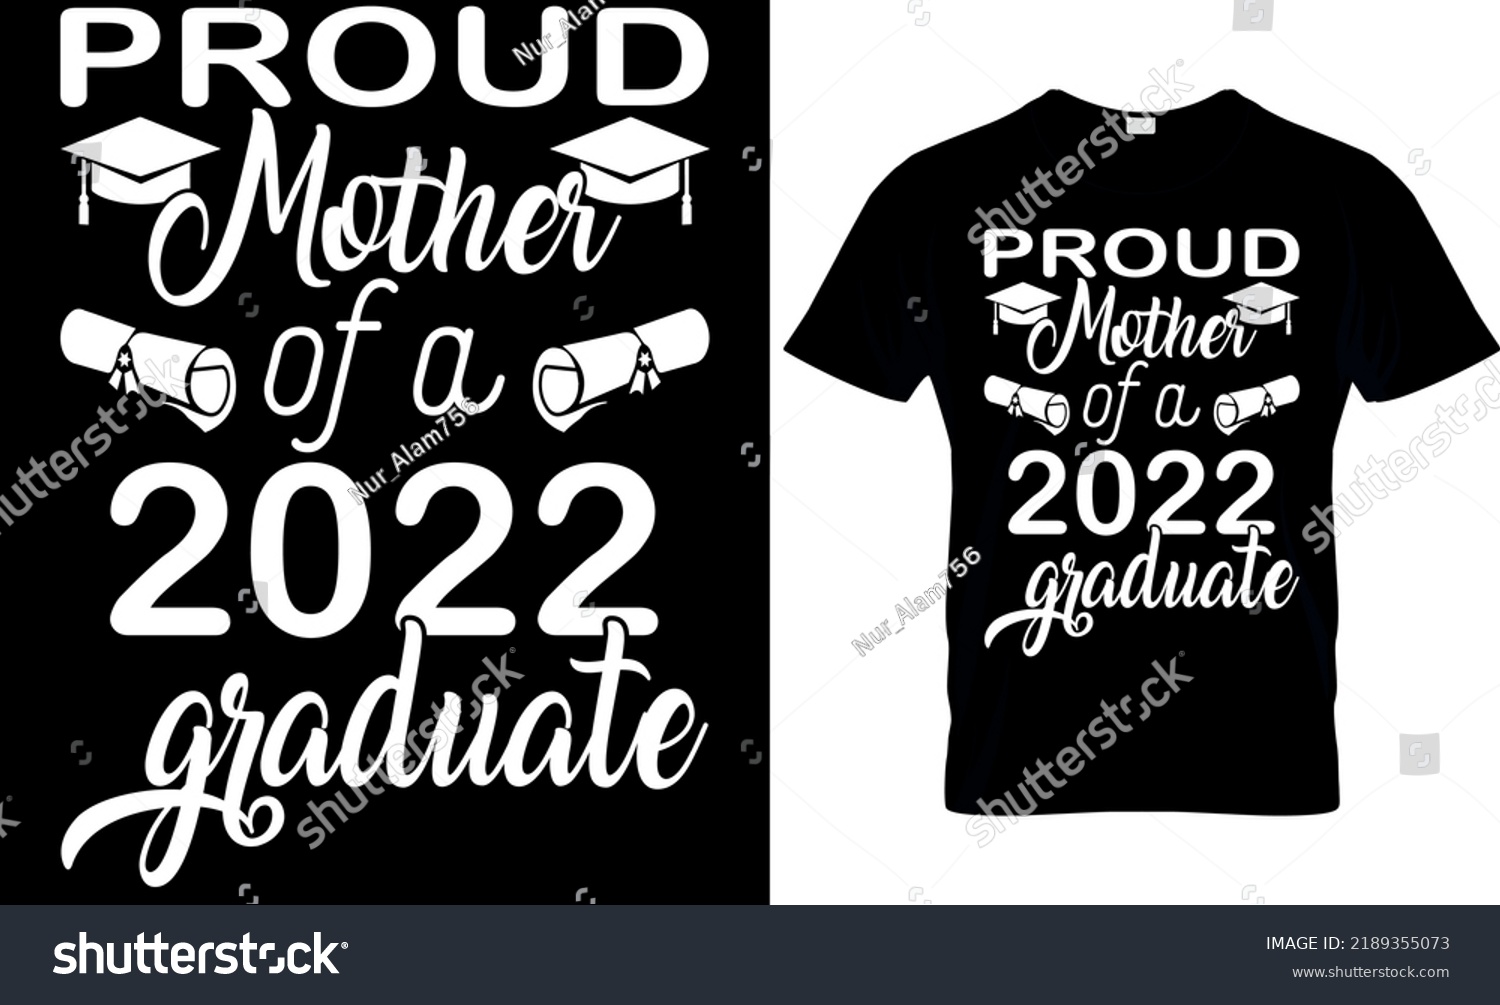 SVG of Proud mother of a 2022 graduate T-shirt high quality is a unique design. svg